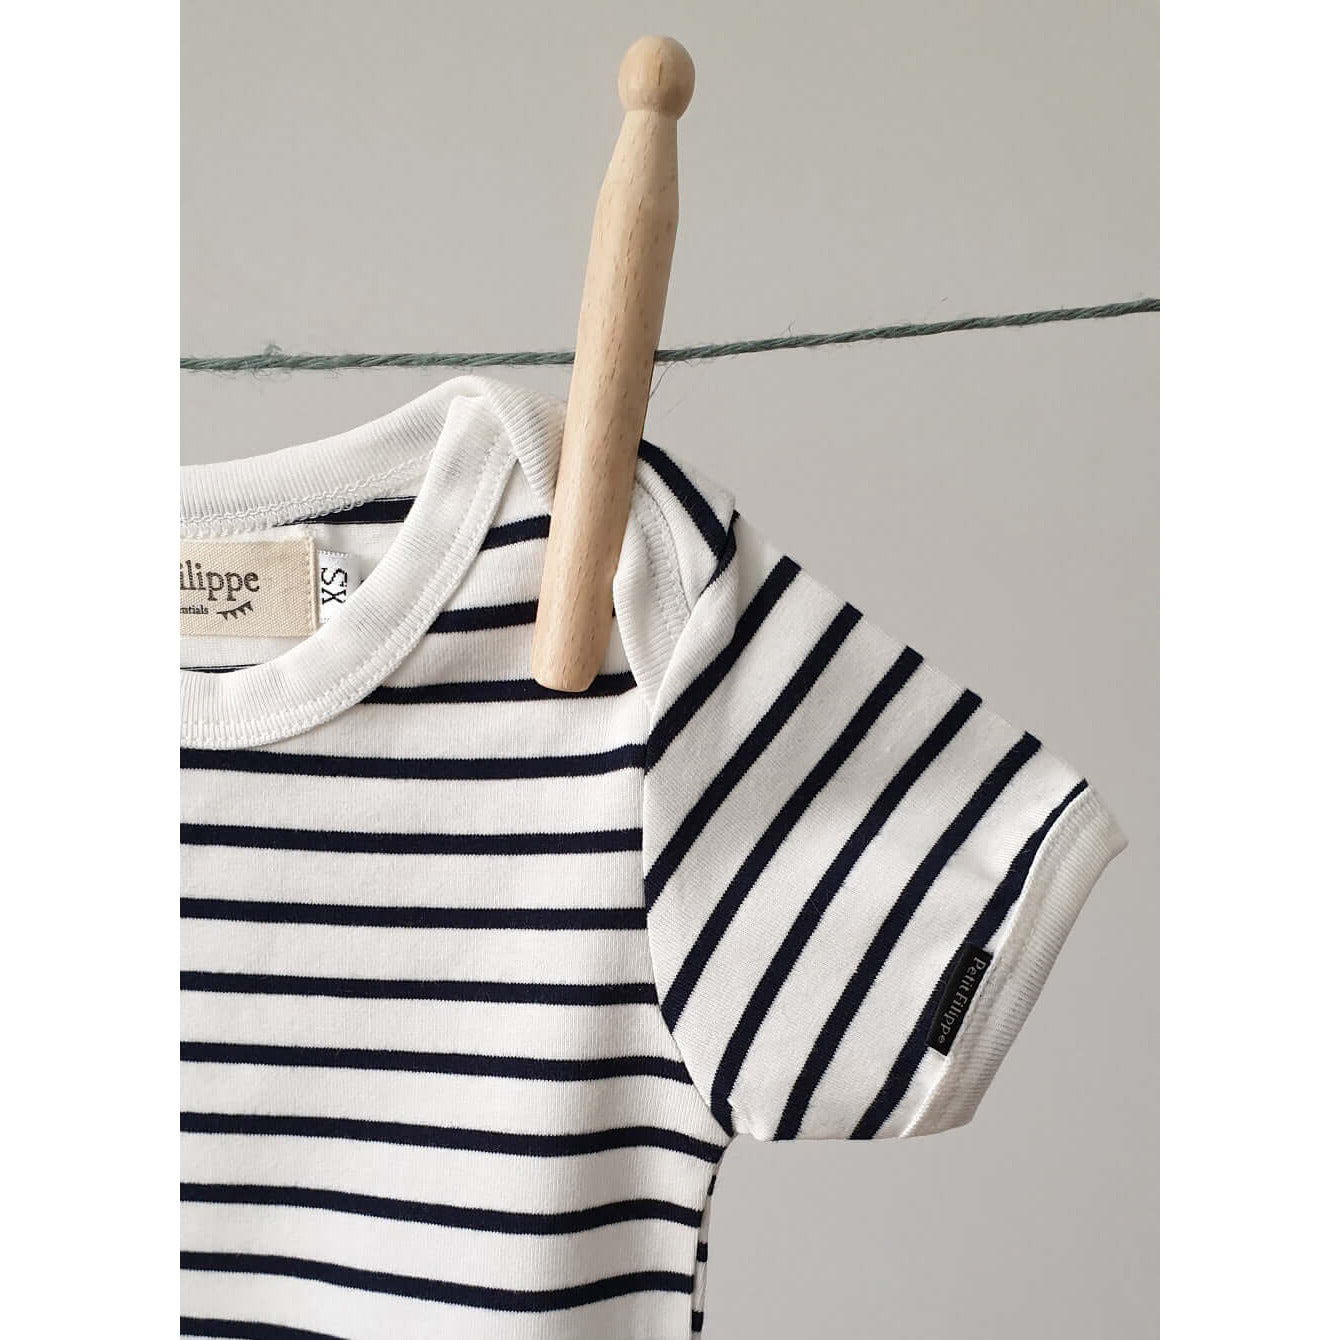 Baby Bodysuit - Short Sleeves - Breton Stripes - Petit Filippe